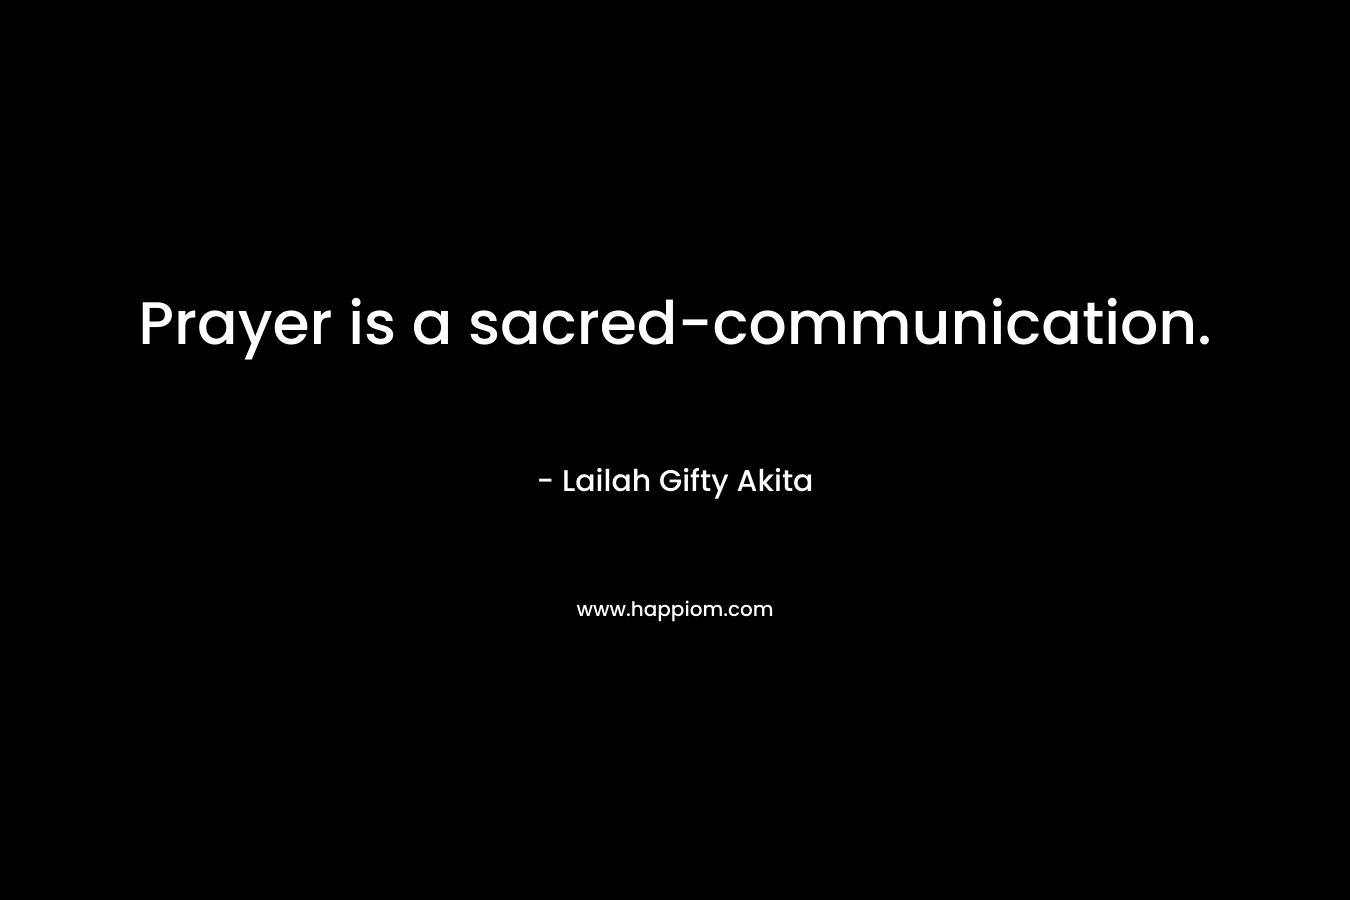 Prayer is a sacred-communication.